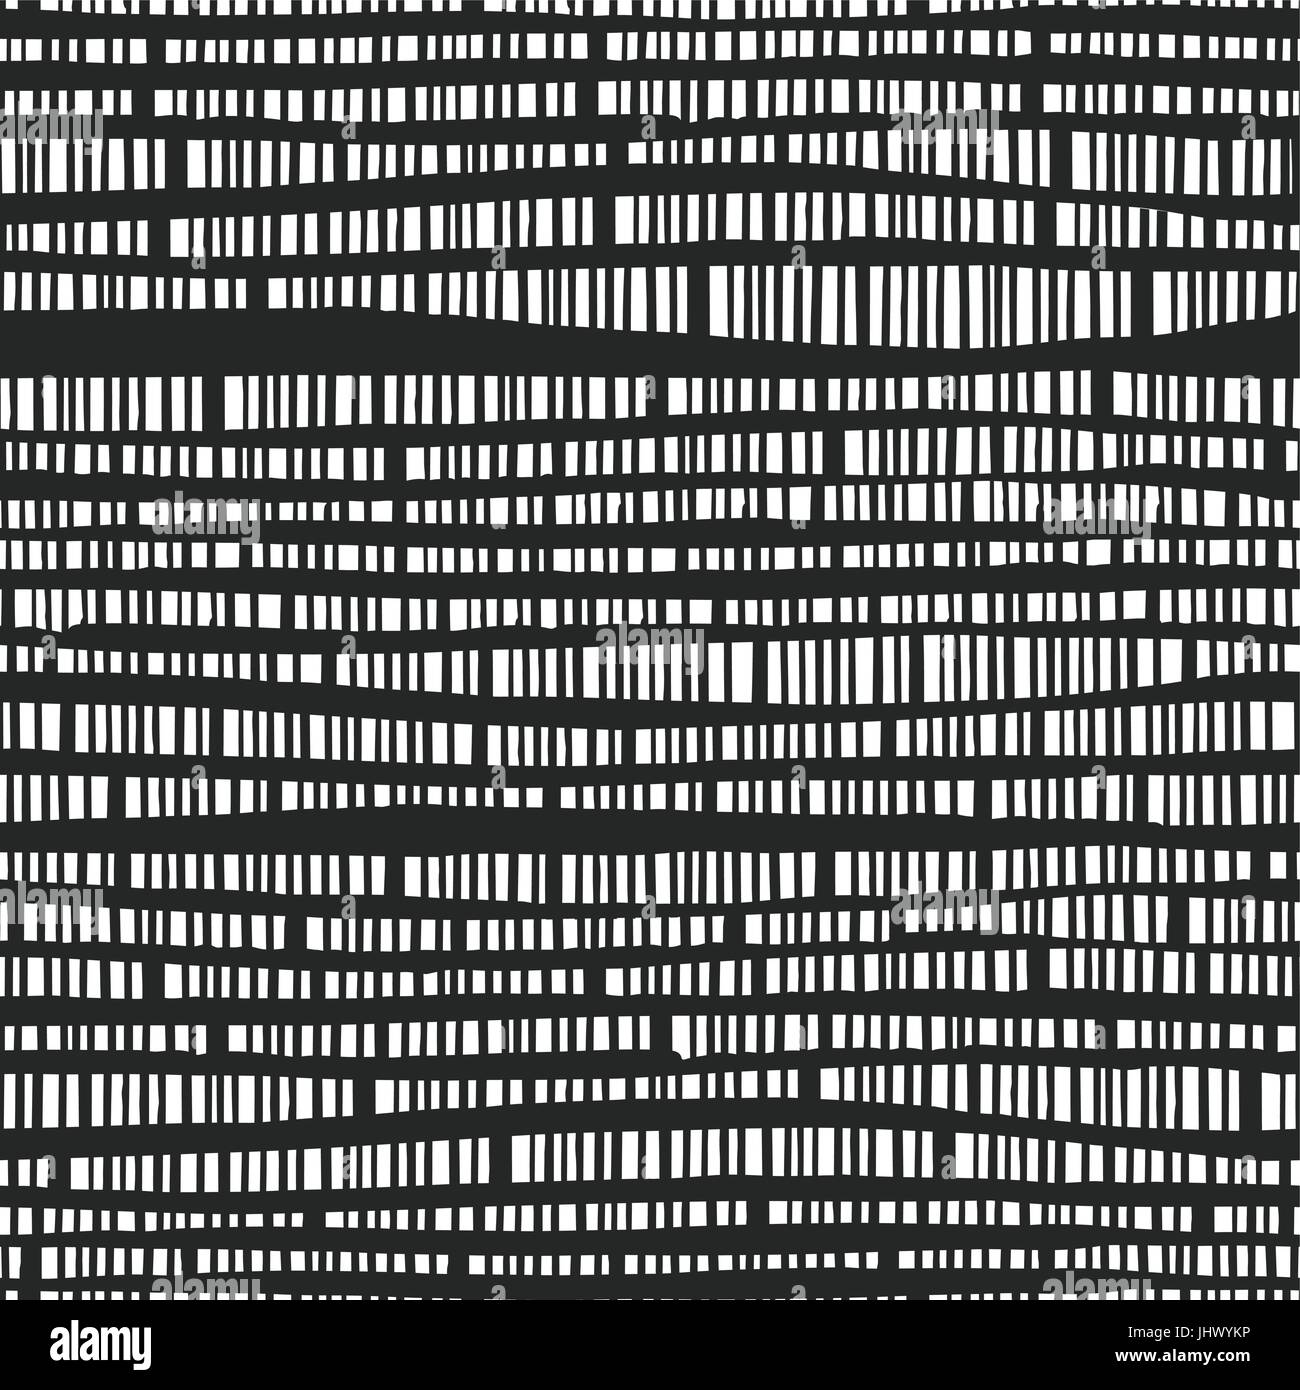 Abstract vector seamless patrón dibujado a mano con líneas verticales. Ilustración monocromo stripes textura. Fondo de plantilla gráfica hipster Ilustración del Vector